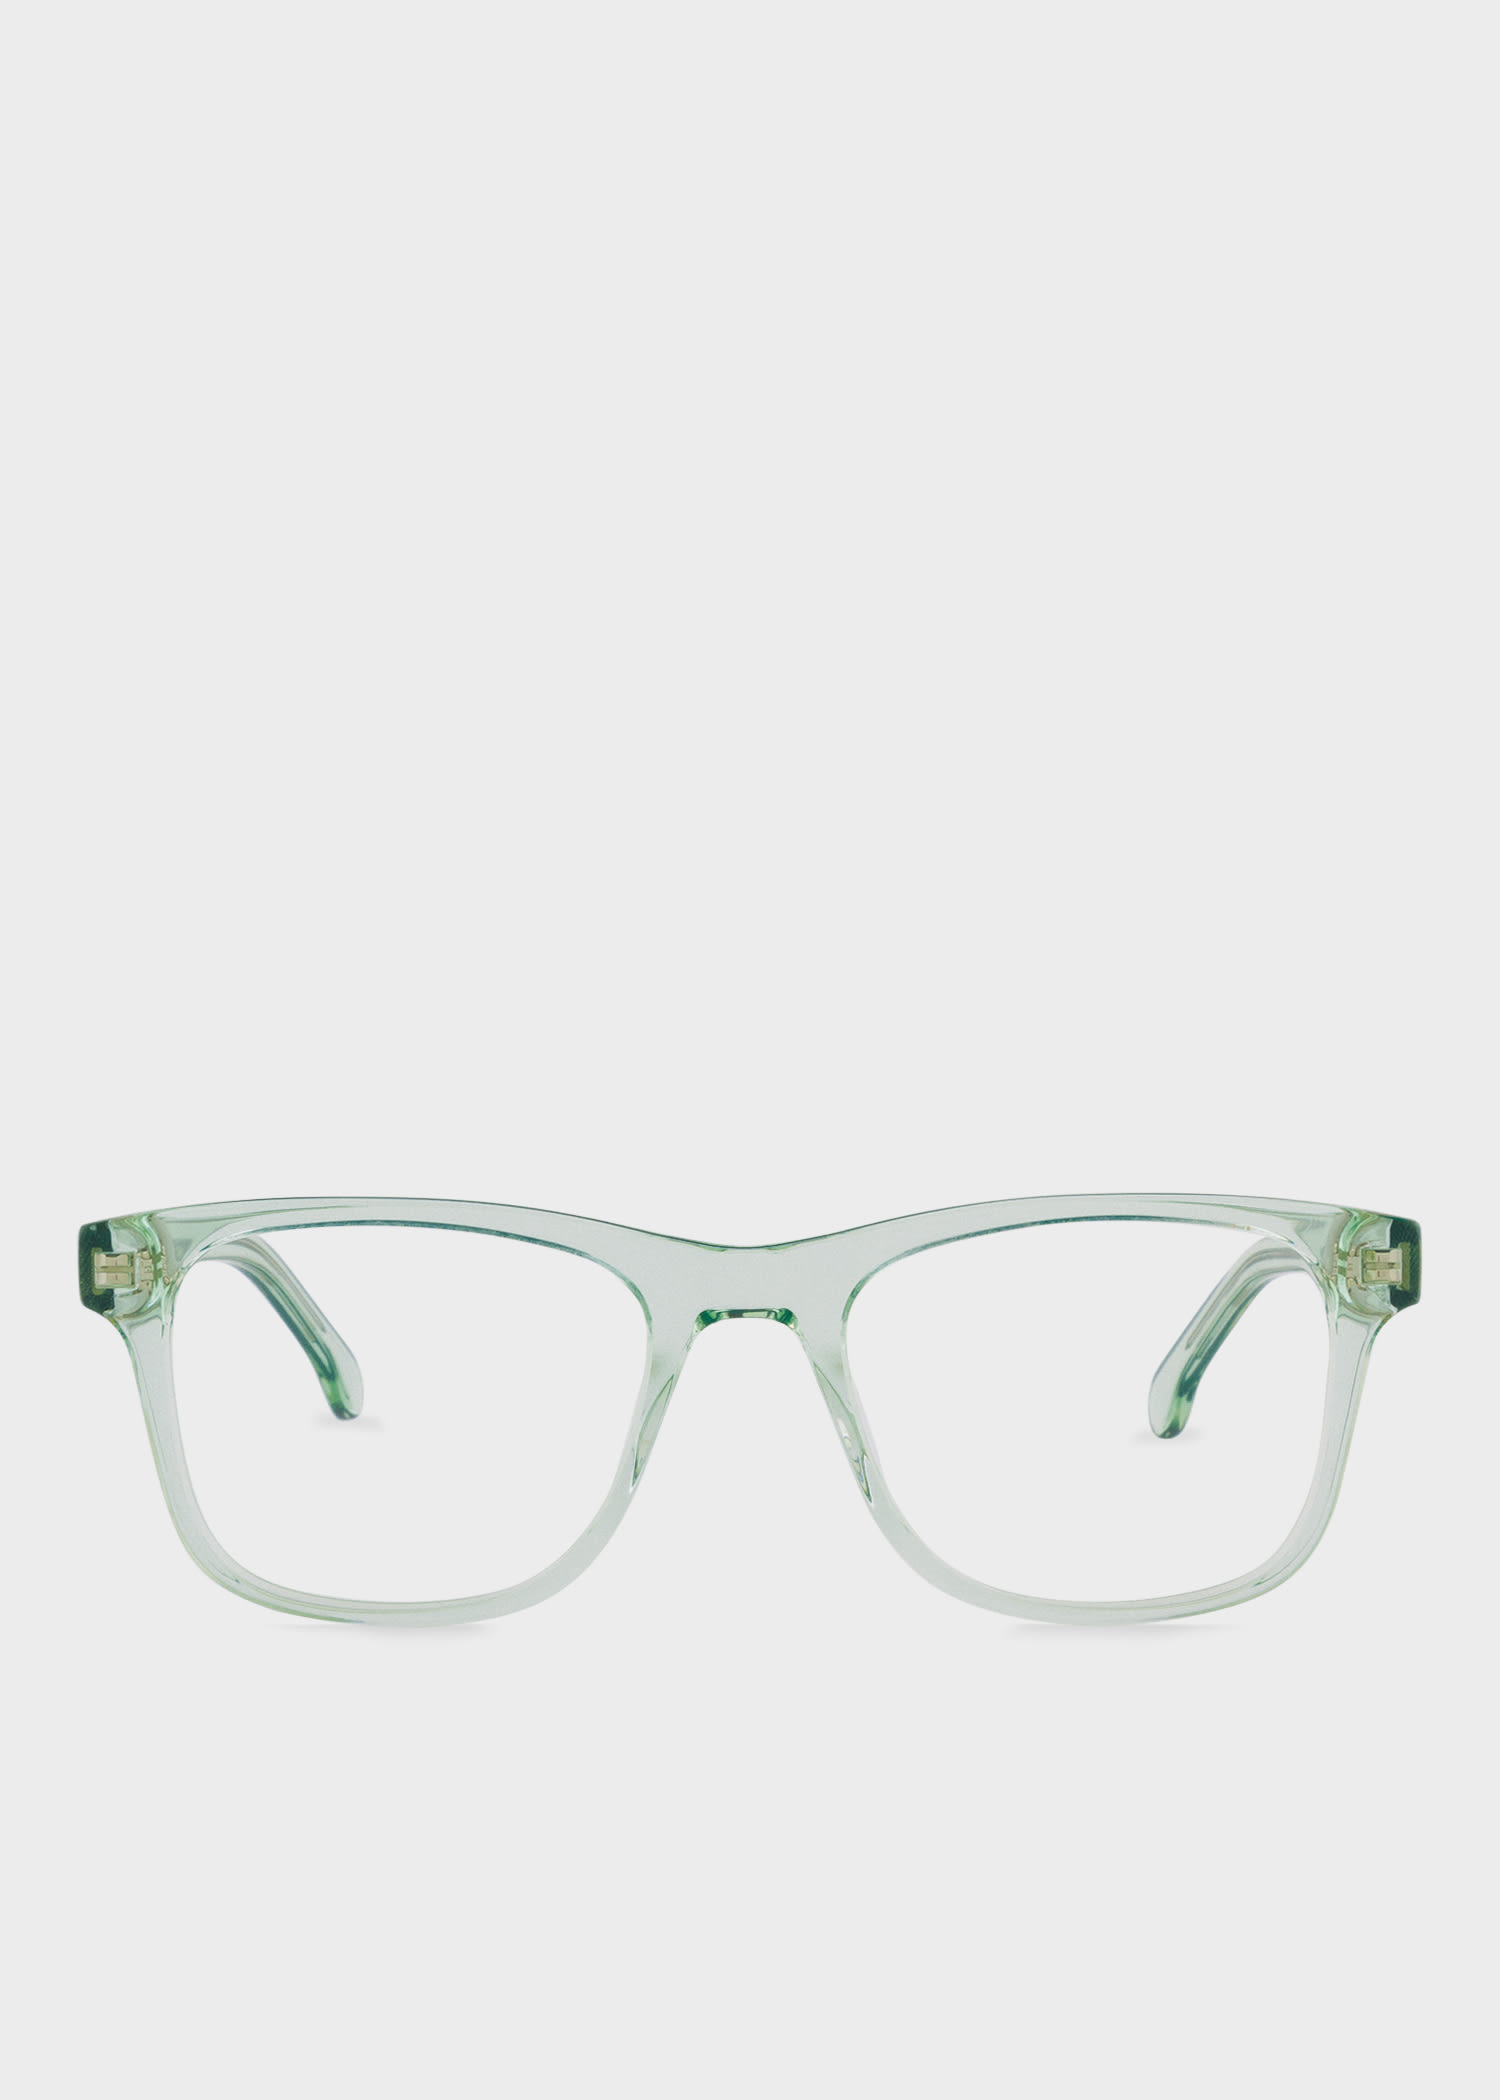 Designer Glasses & Sunglasses - Paul Smith